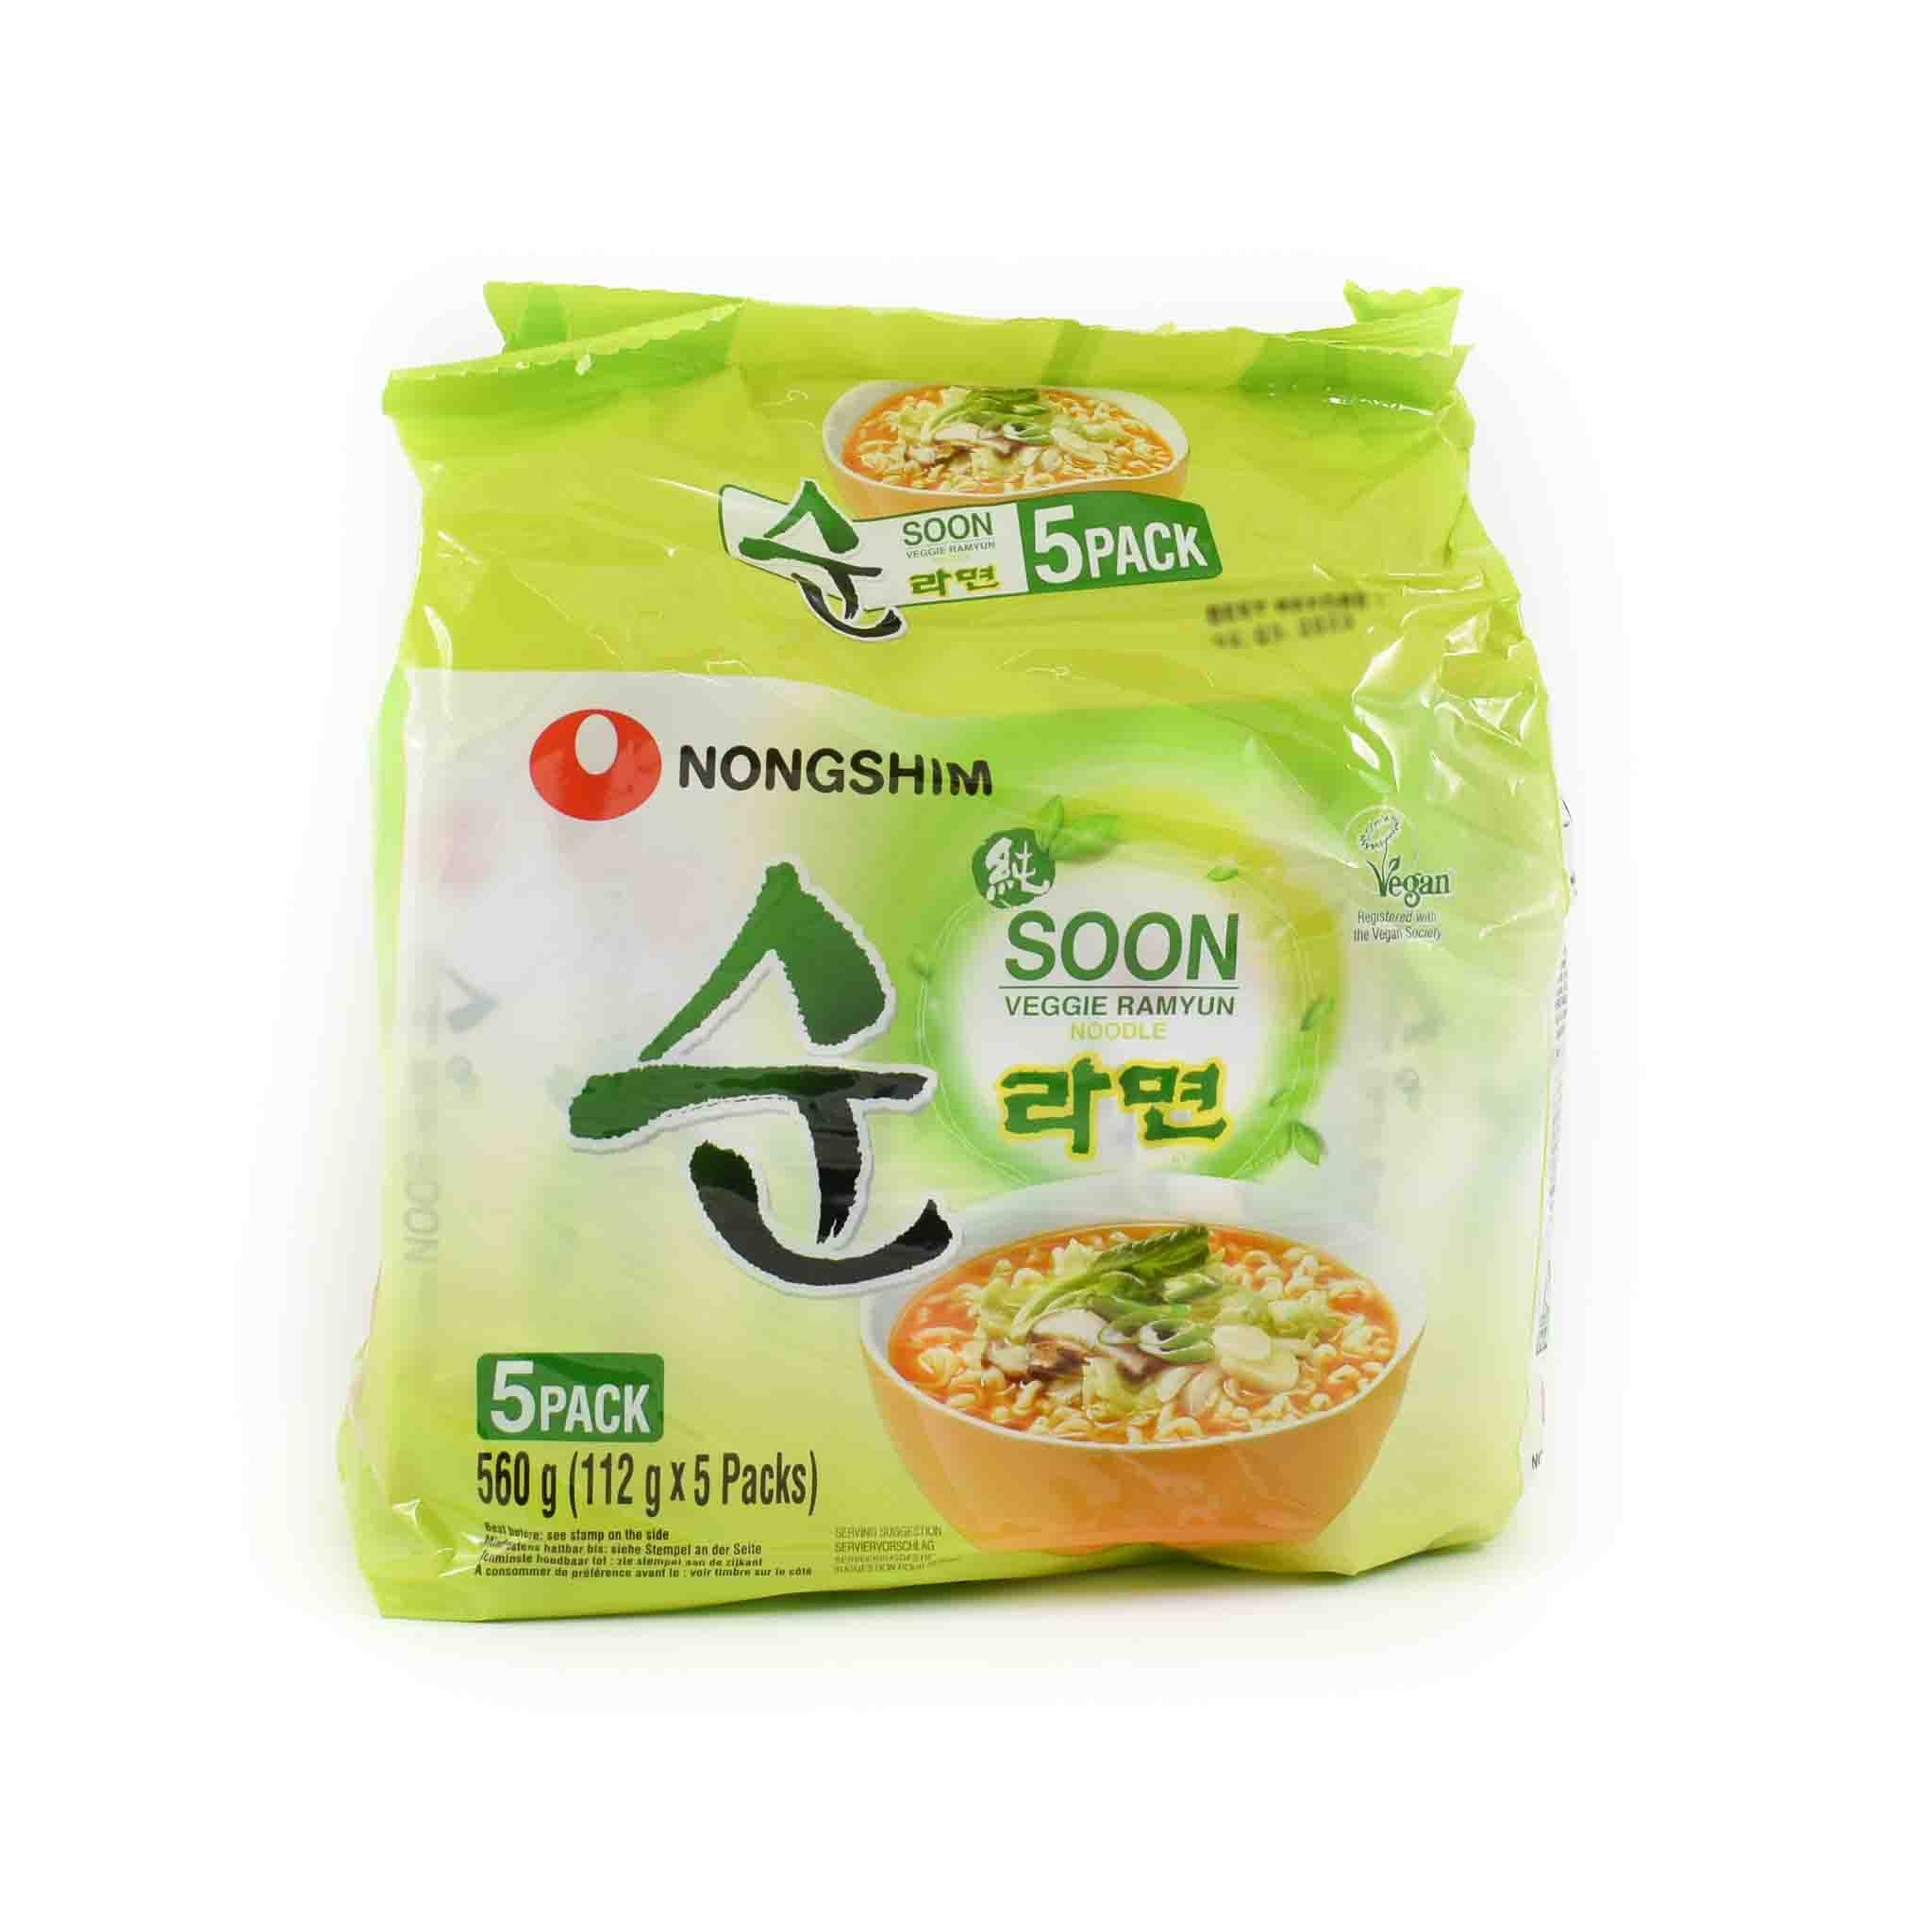 HA0058 Nongshim Veggie Soon Ramyun Multi Pack Noodles, 5 x 112g